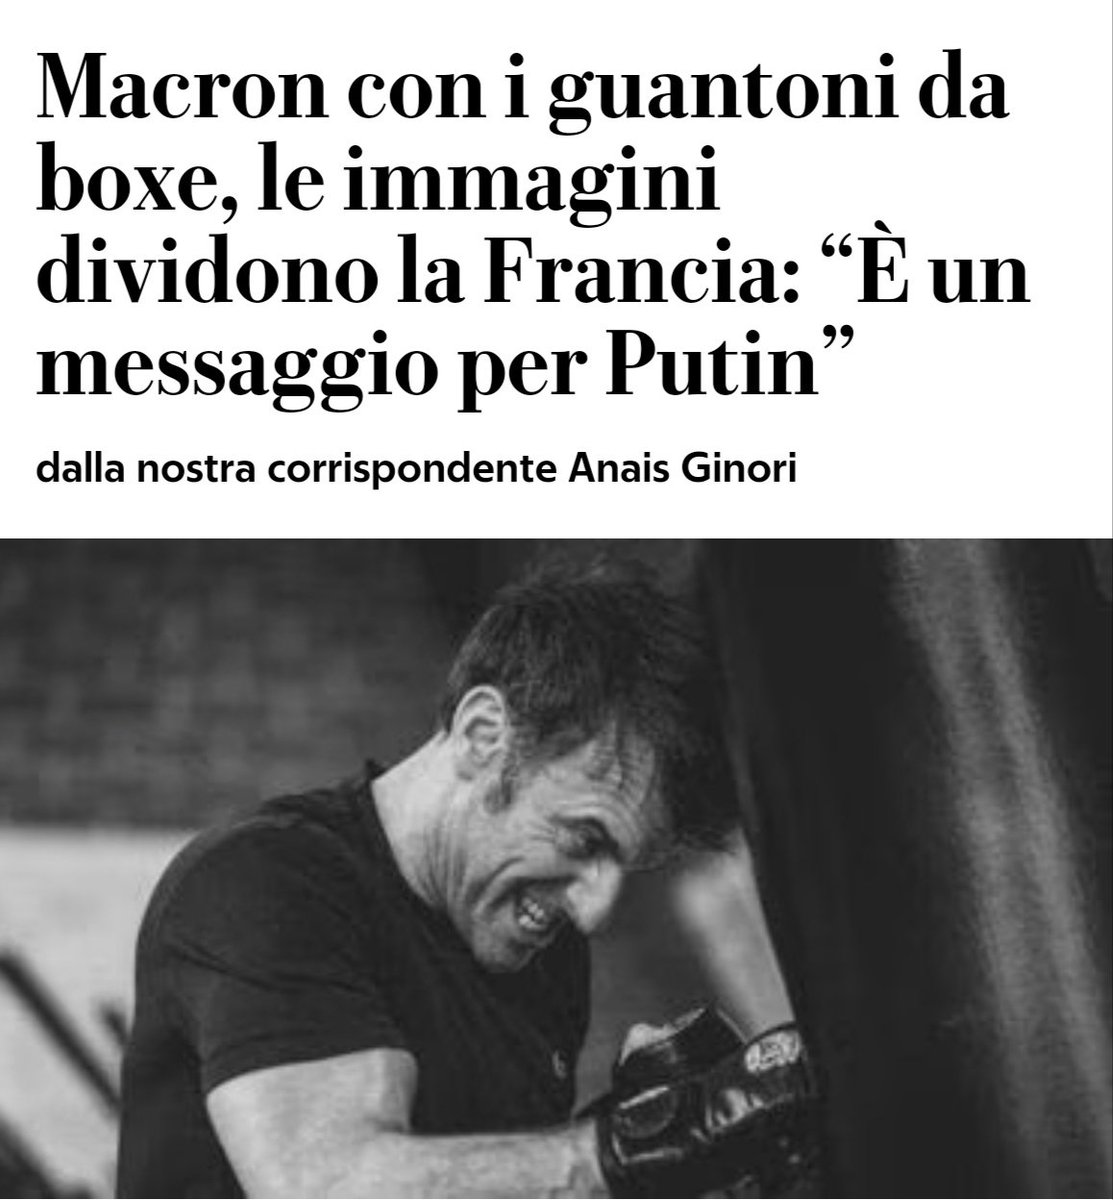 Pronto per il titolo europeo dei pesi Mosca.

#Macron #21marzo